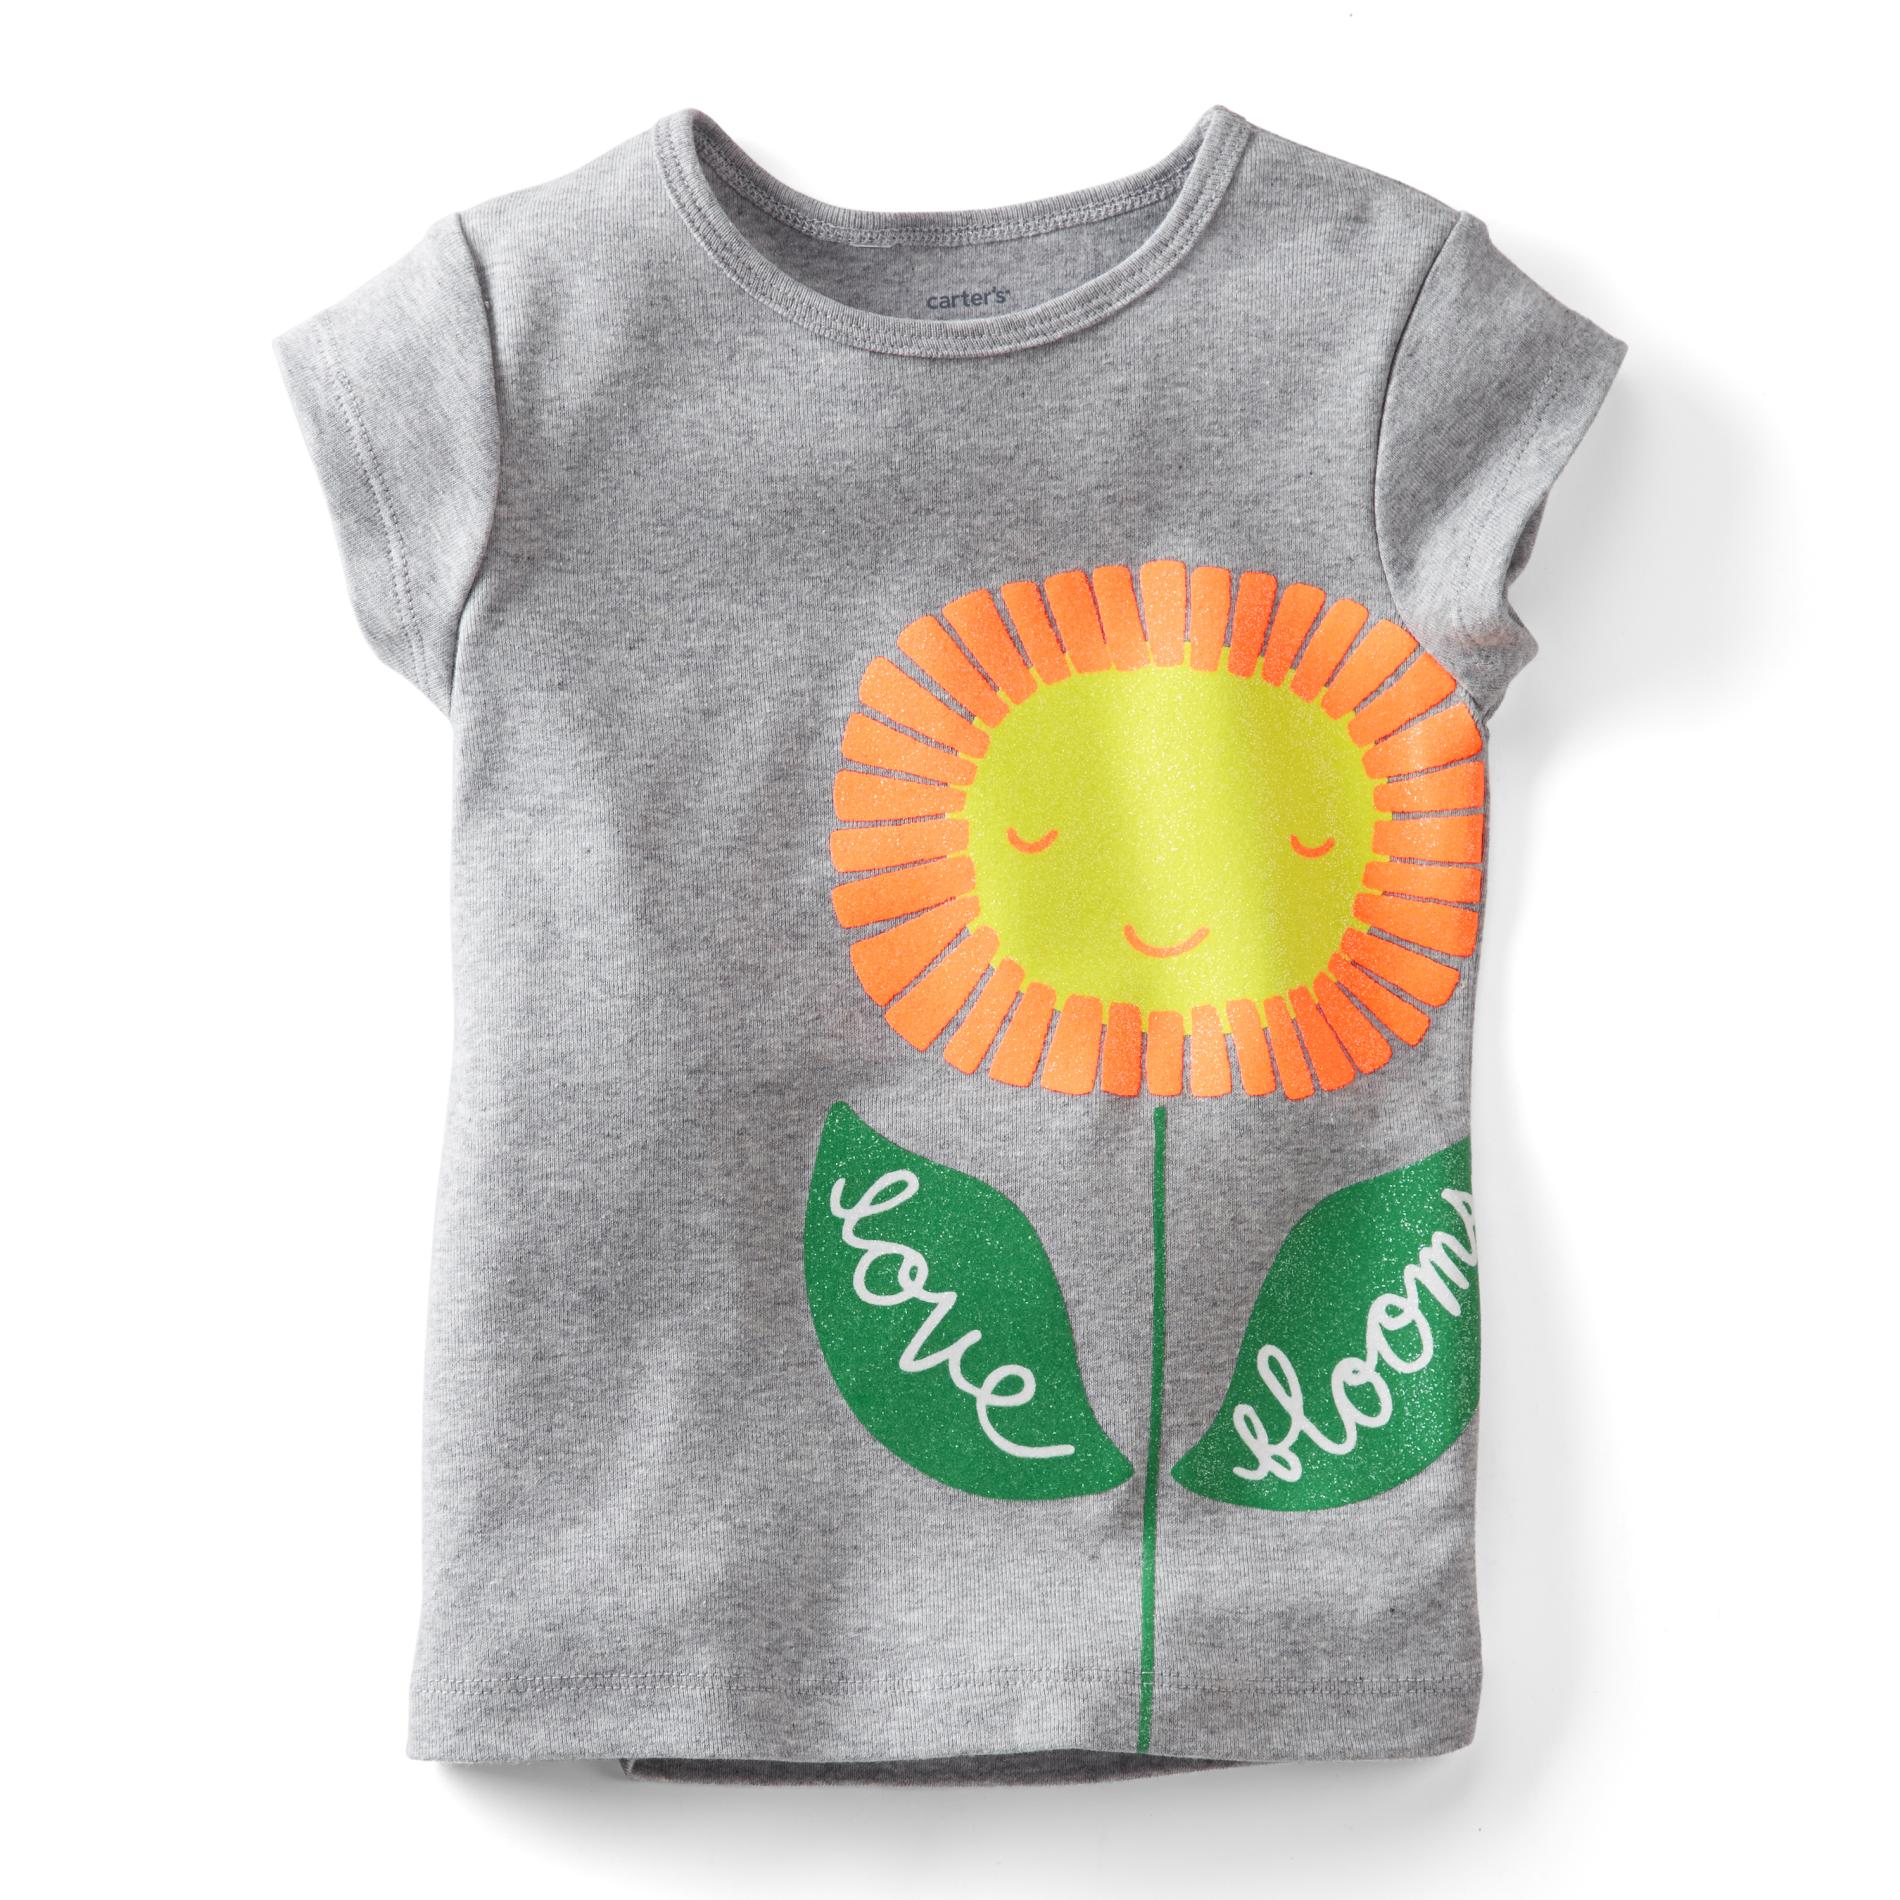 Carter's Girl's Graphic T-Shirt - Sunflower